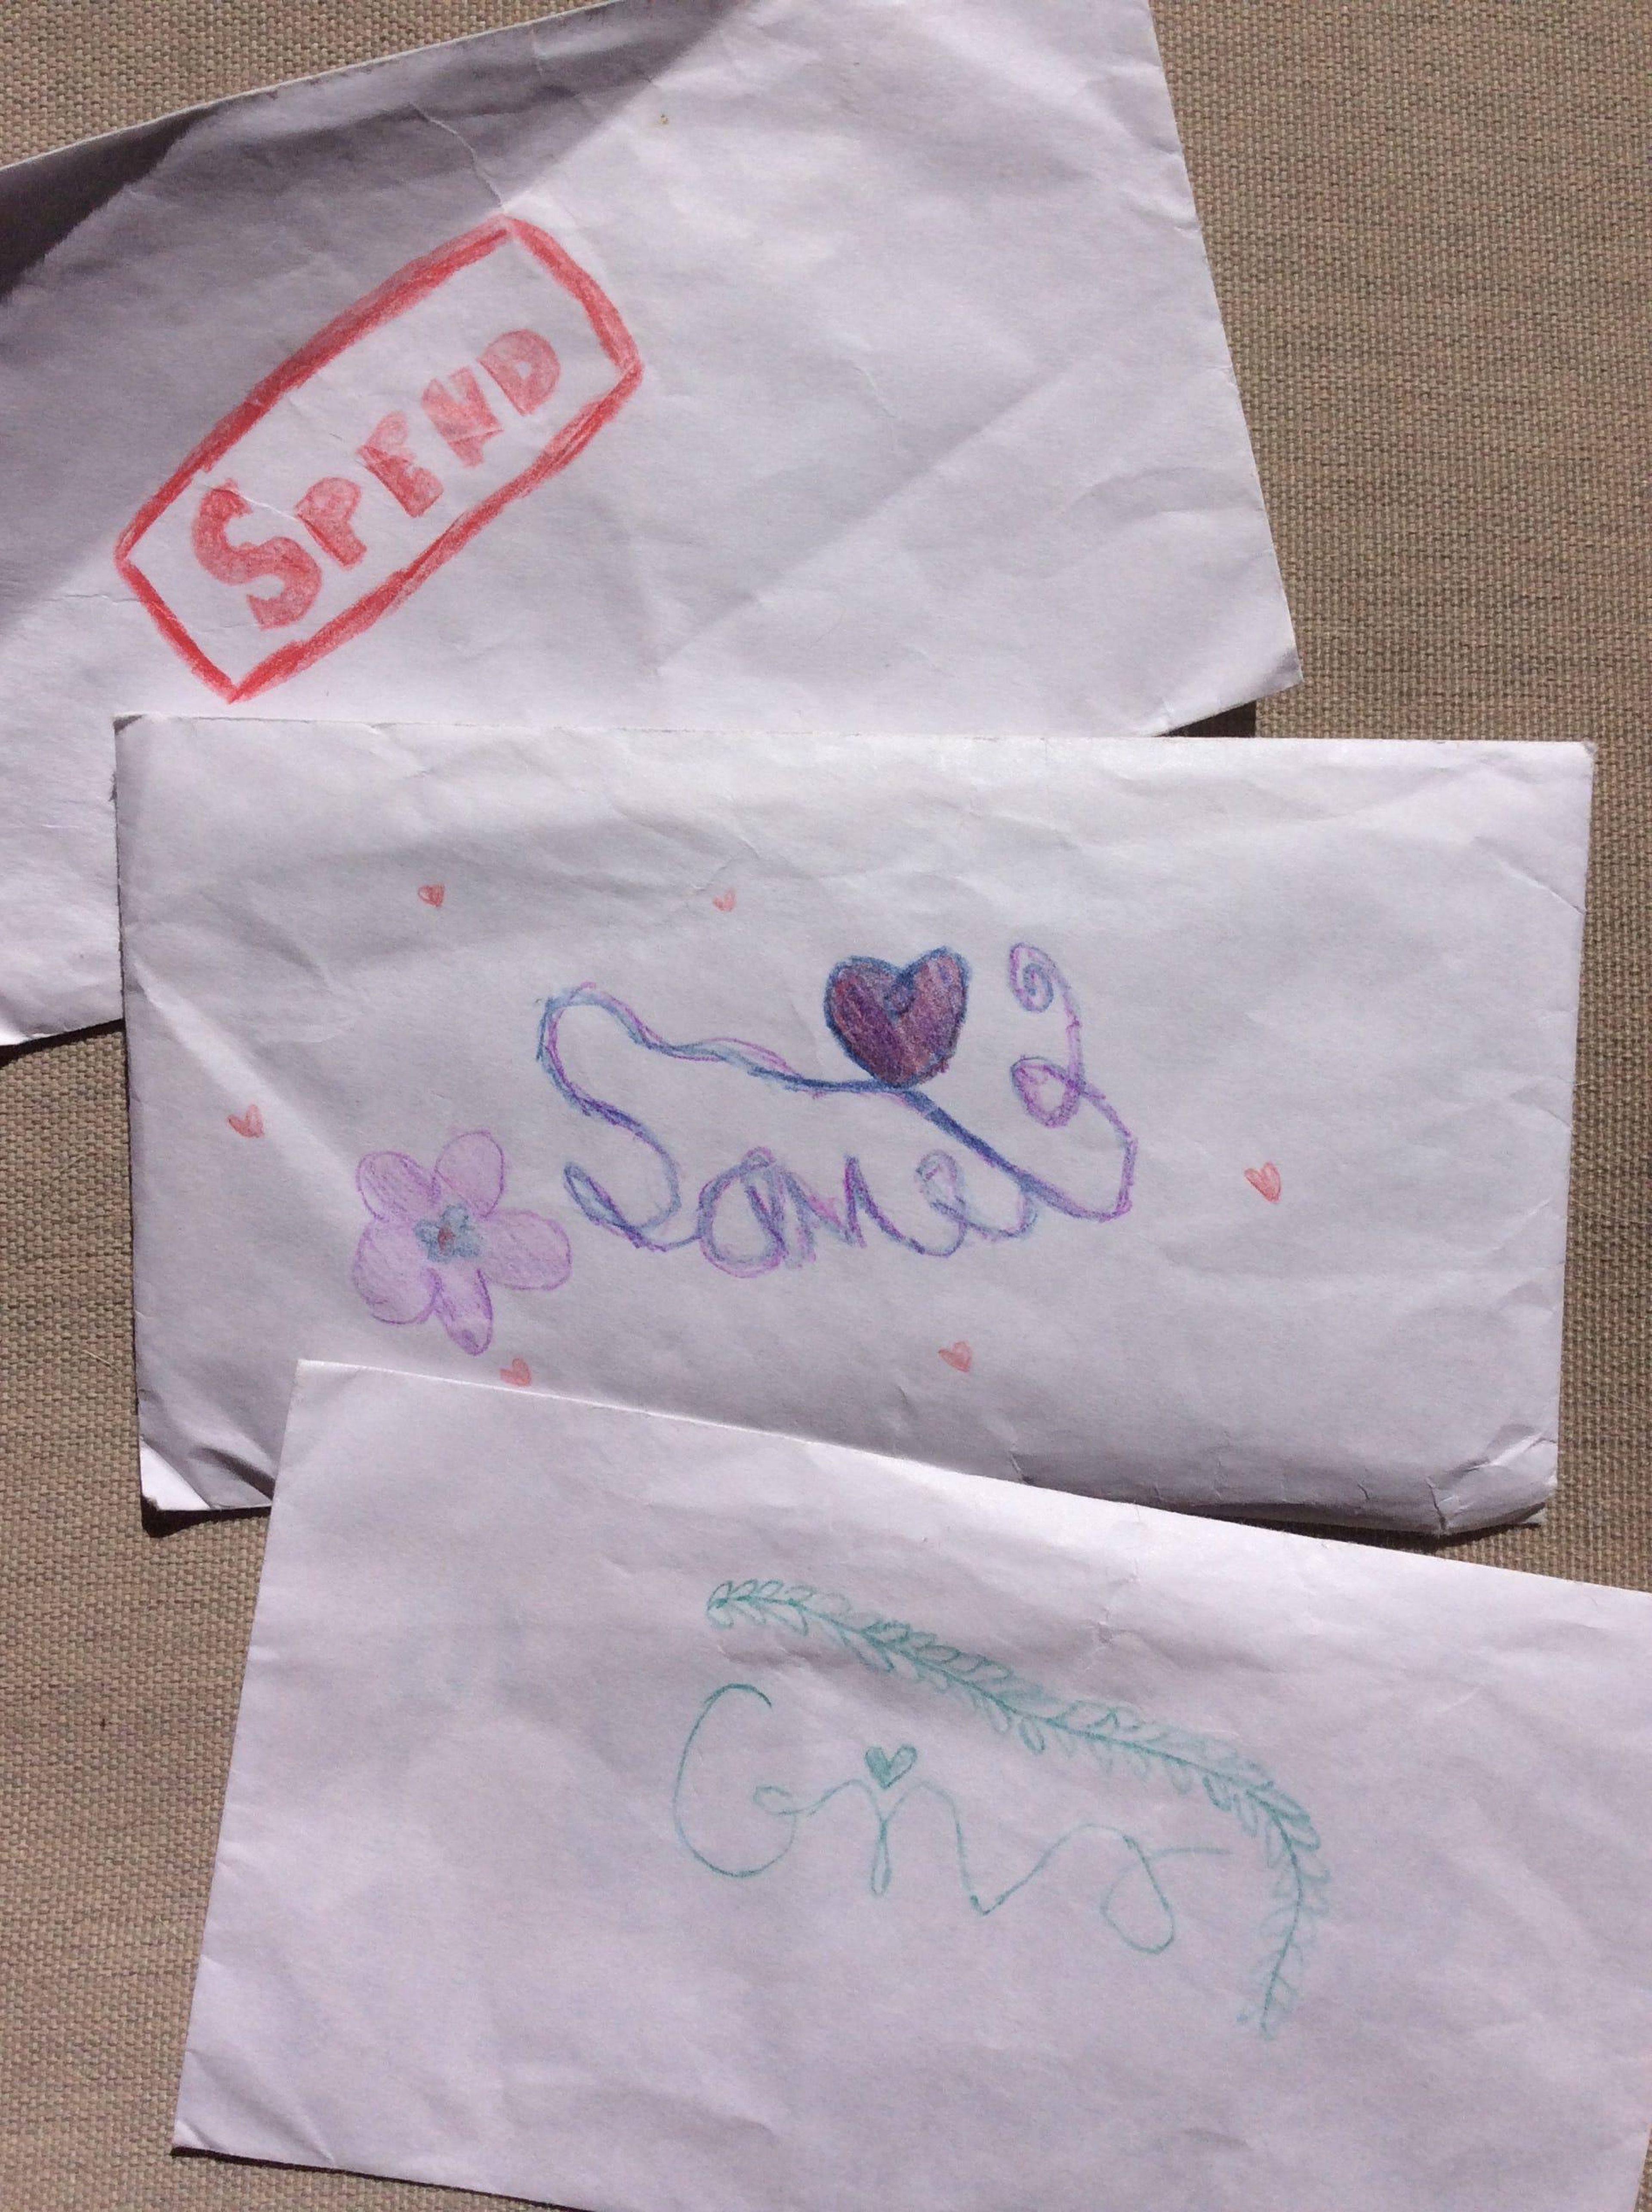 Lauren's three envelopes. Courtesy of Aimee Nelson